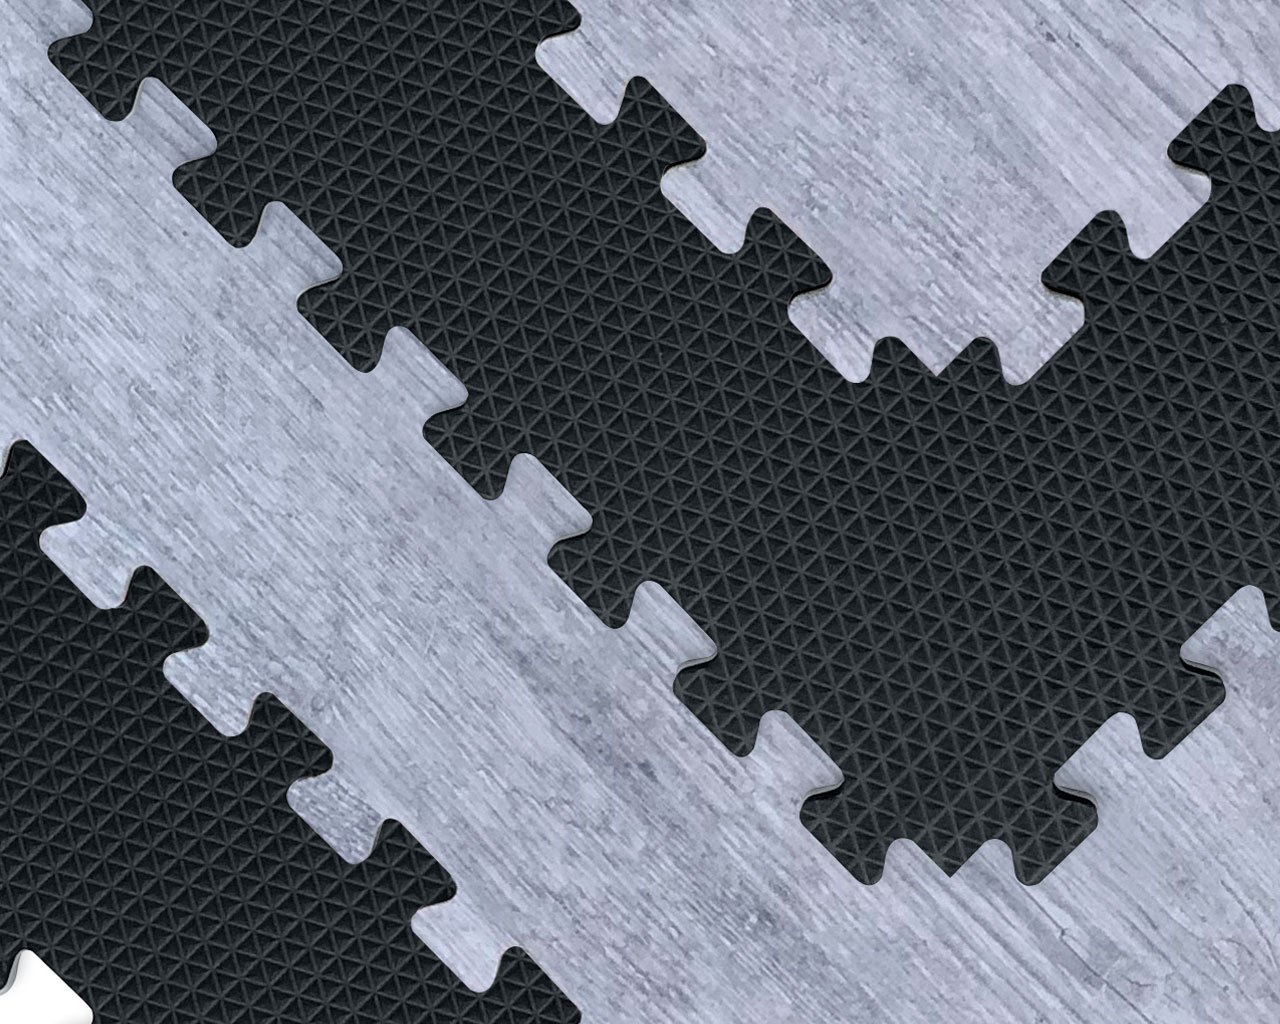 Norsk 24 Sq ft Interlocking Foam Floor Mat, 6-Pack, Gray, Size: 24 inch x 24 inch